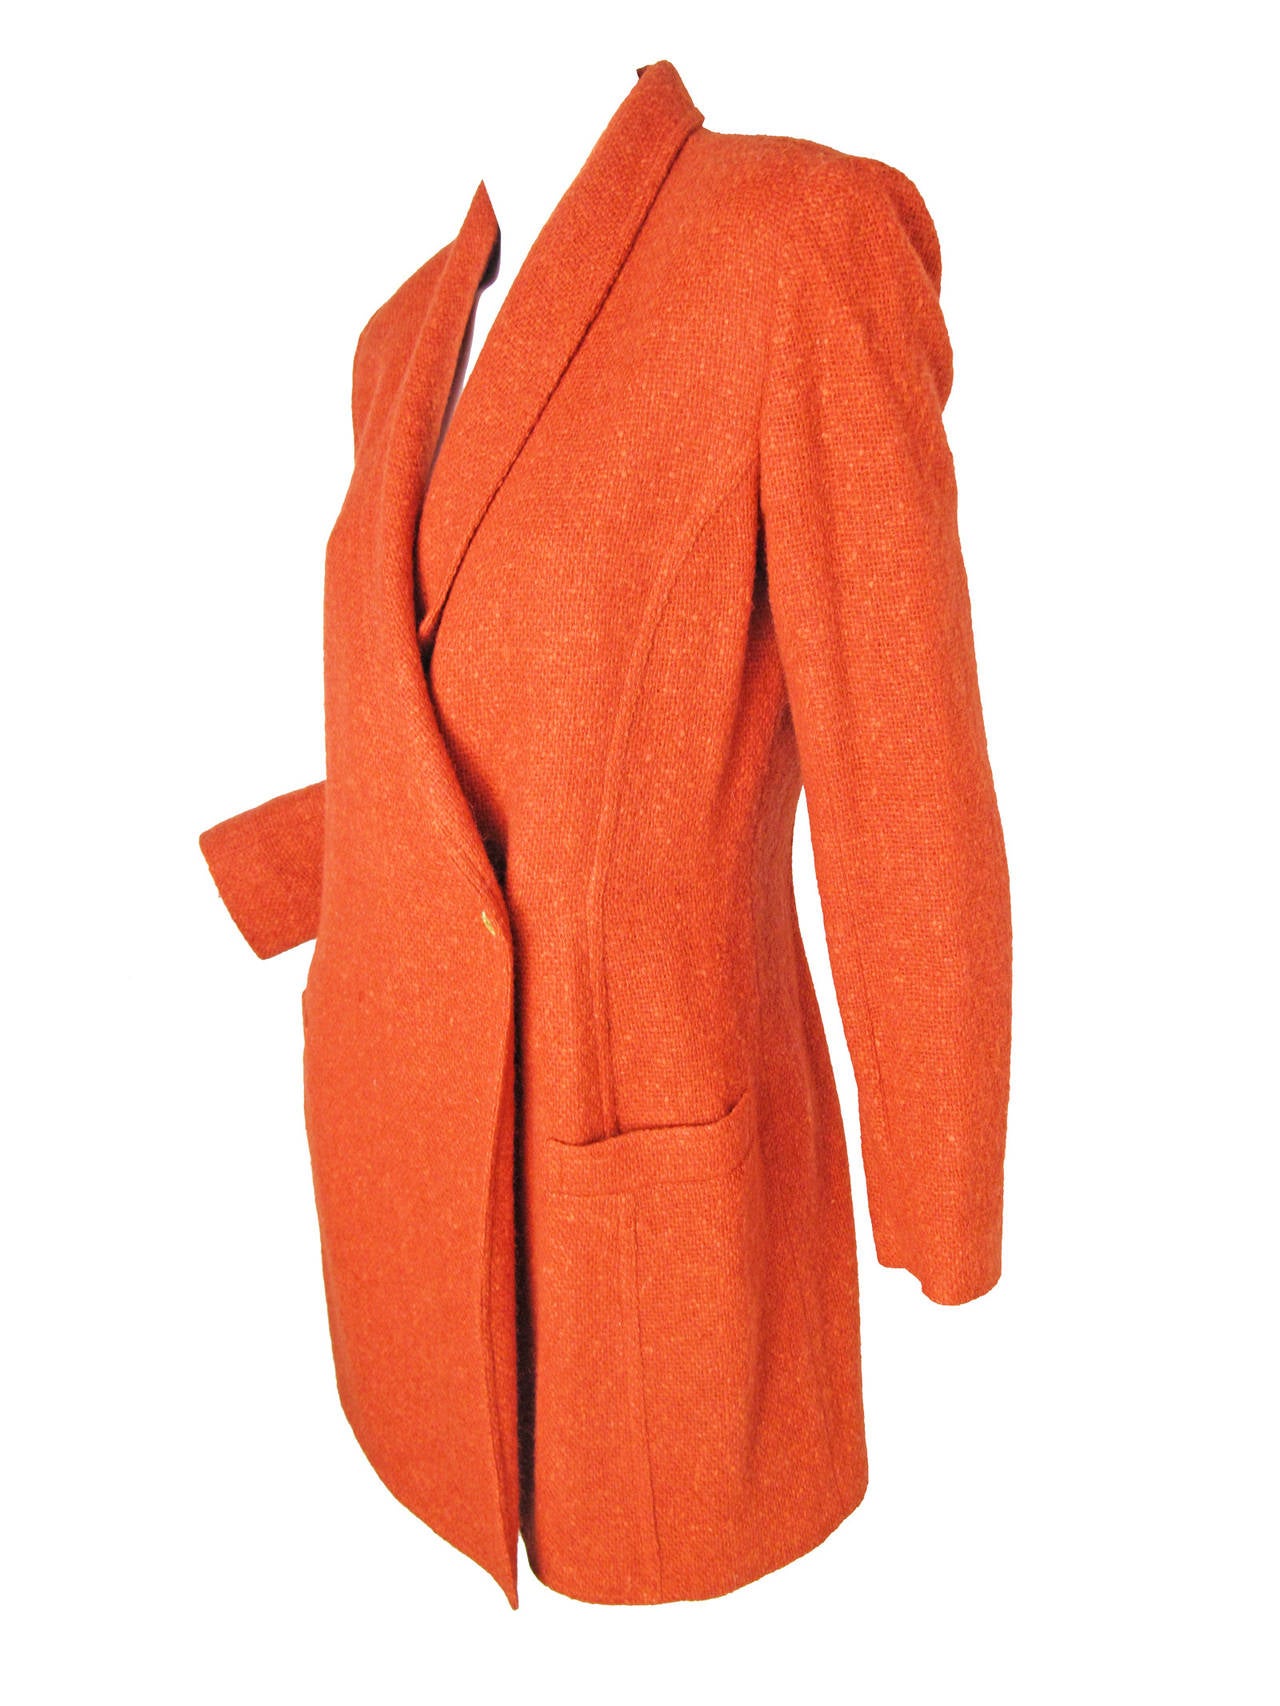 Sonia Rykiel orange wool coat.  One side button closure, two front pockets.  38